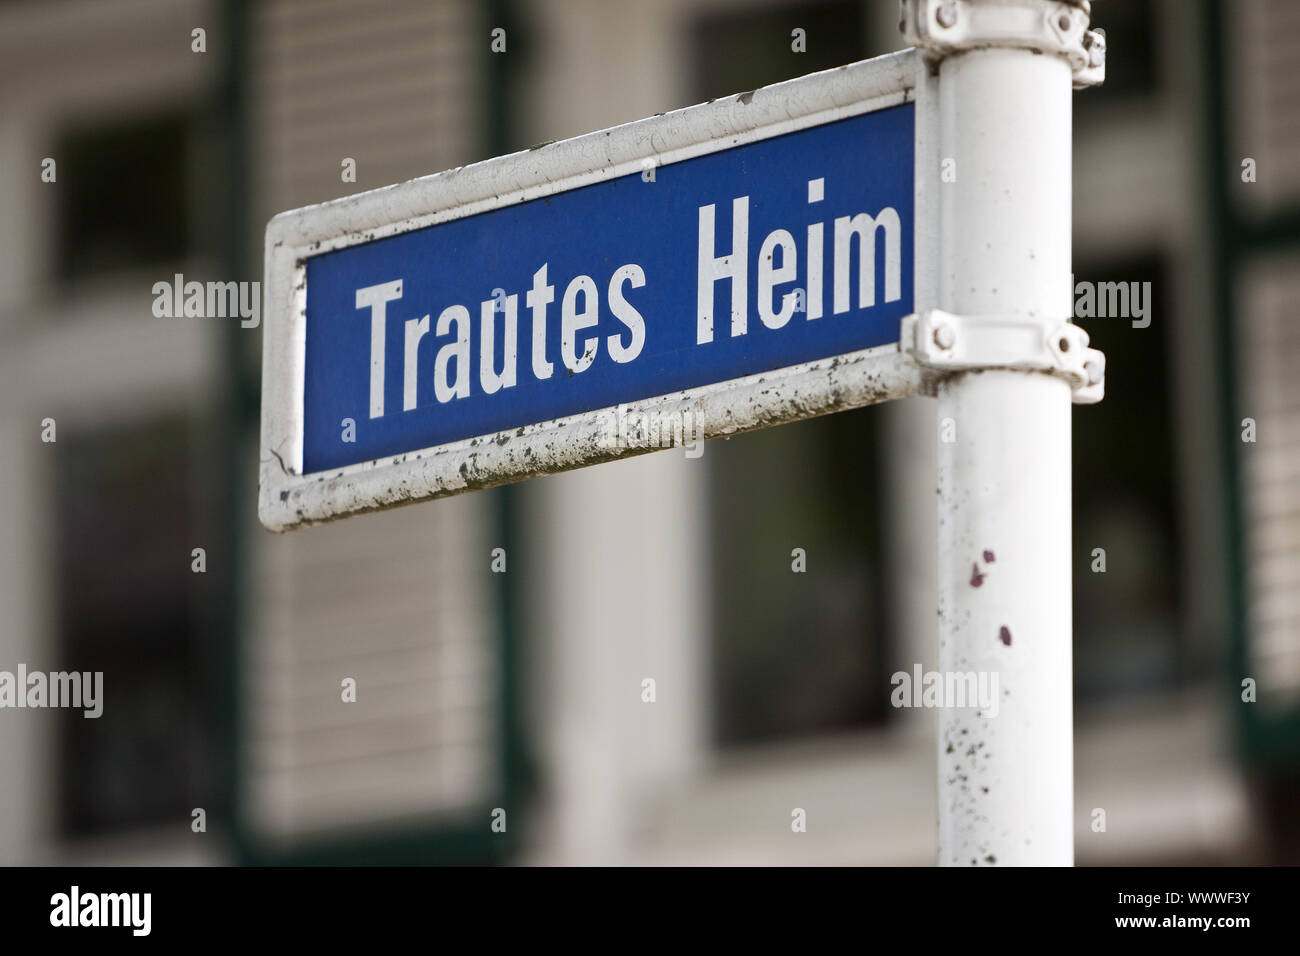 road name Trautes Heim - sweet home, settlement Magarethenhoehe, Essen, Germany, Europe Stock Photo